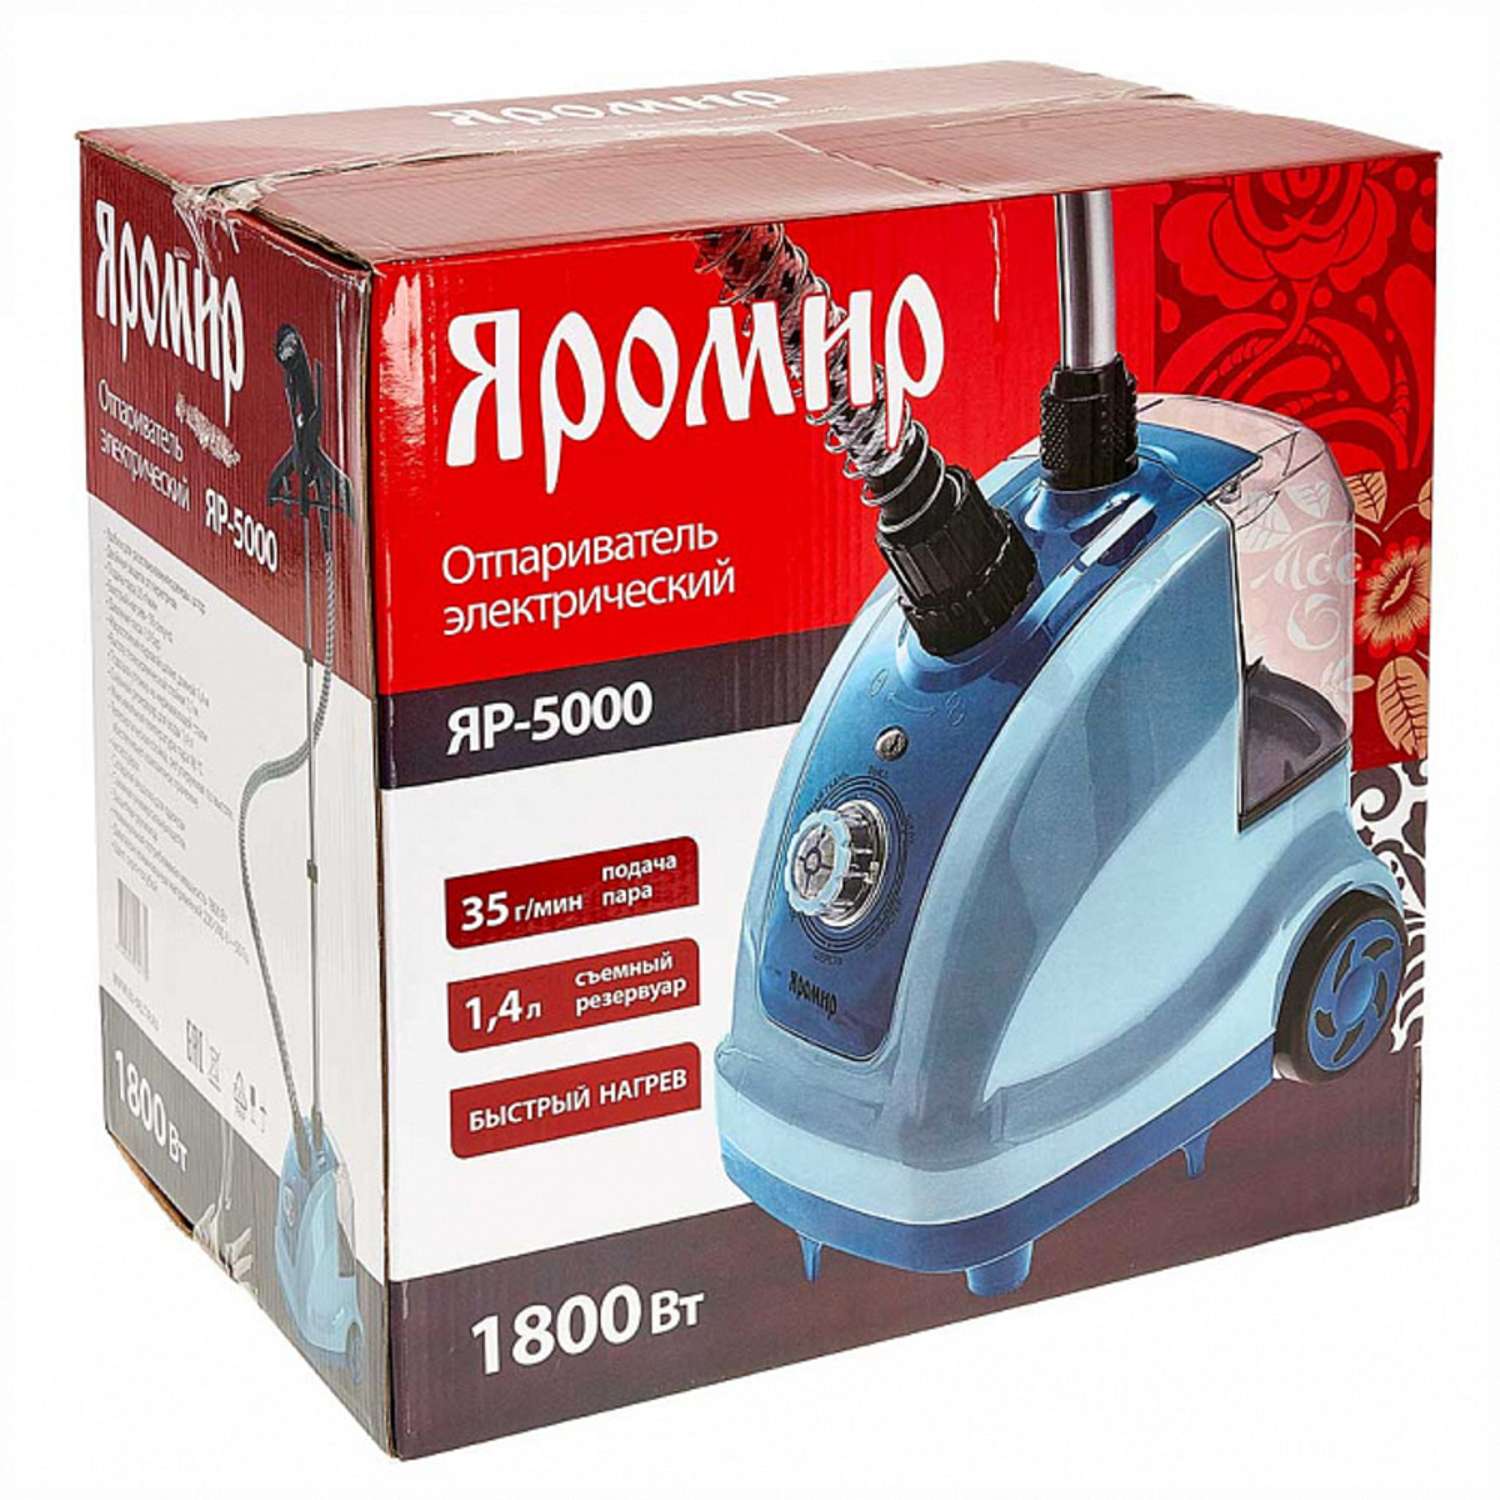 Отпариватели Яромир ЯР-5000 голубой 1800 Вт резервуар для воды 14 л - фото 10